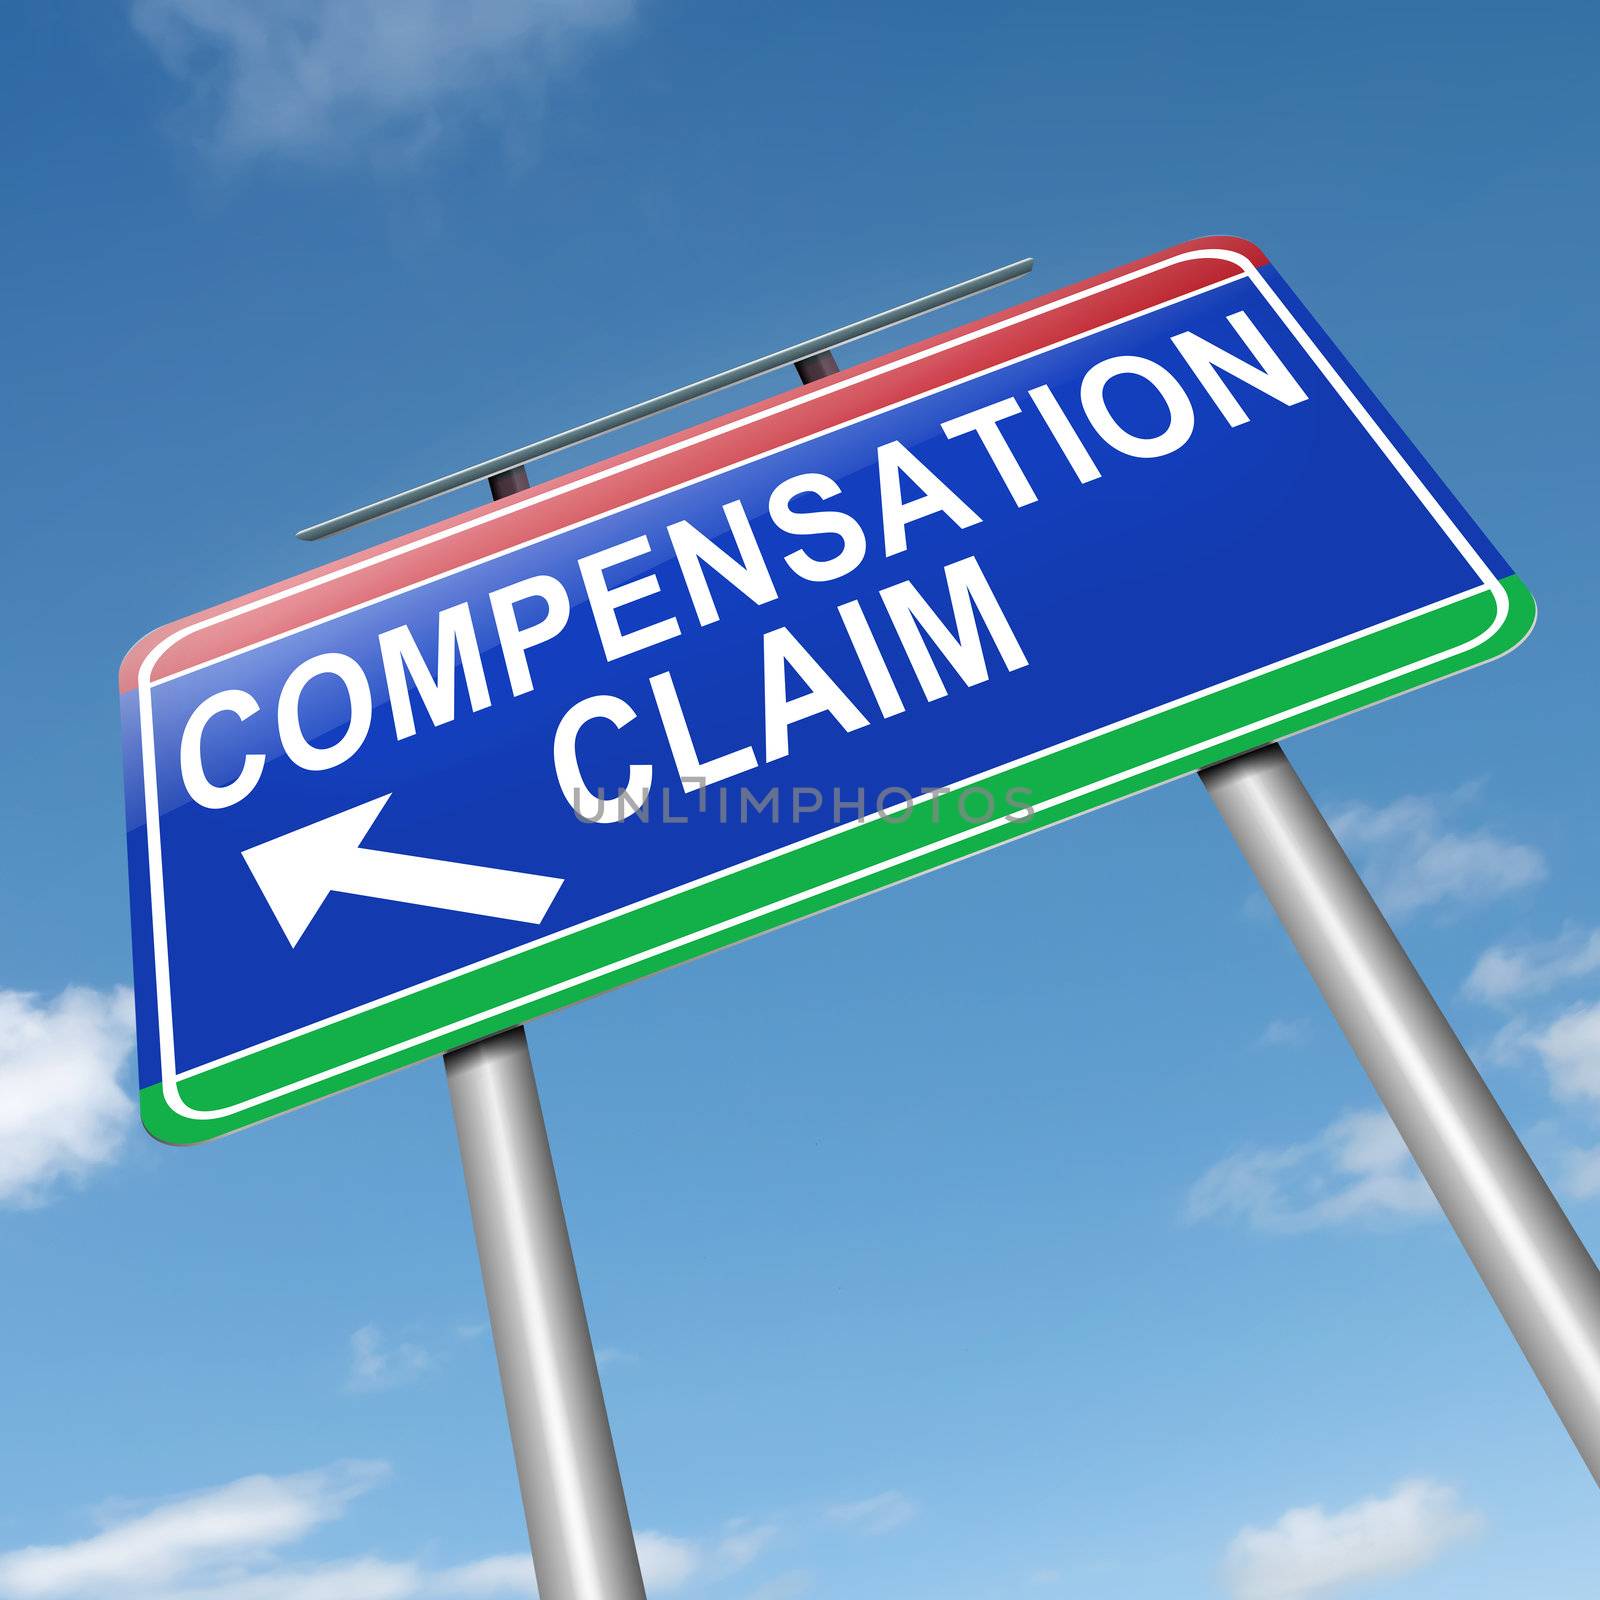 Compensation claim. by 72soul